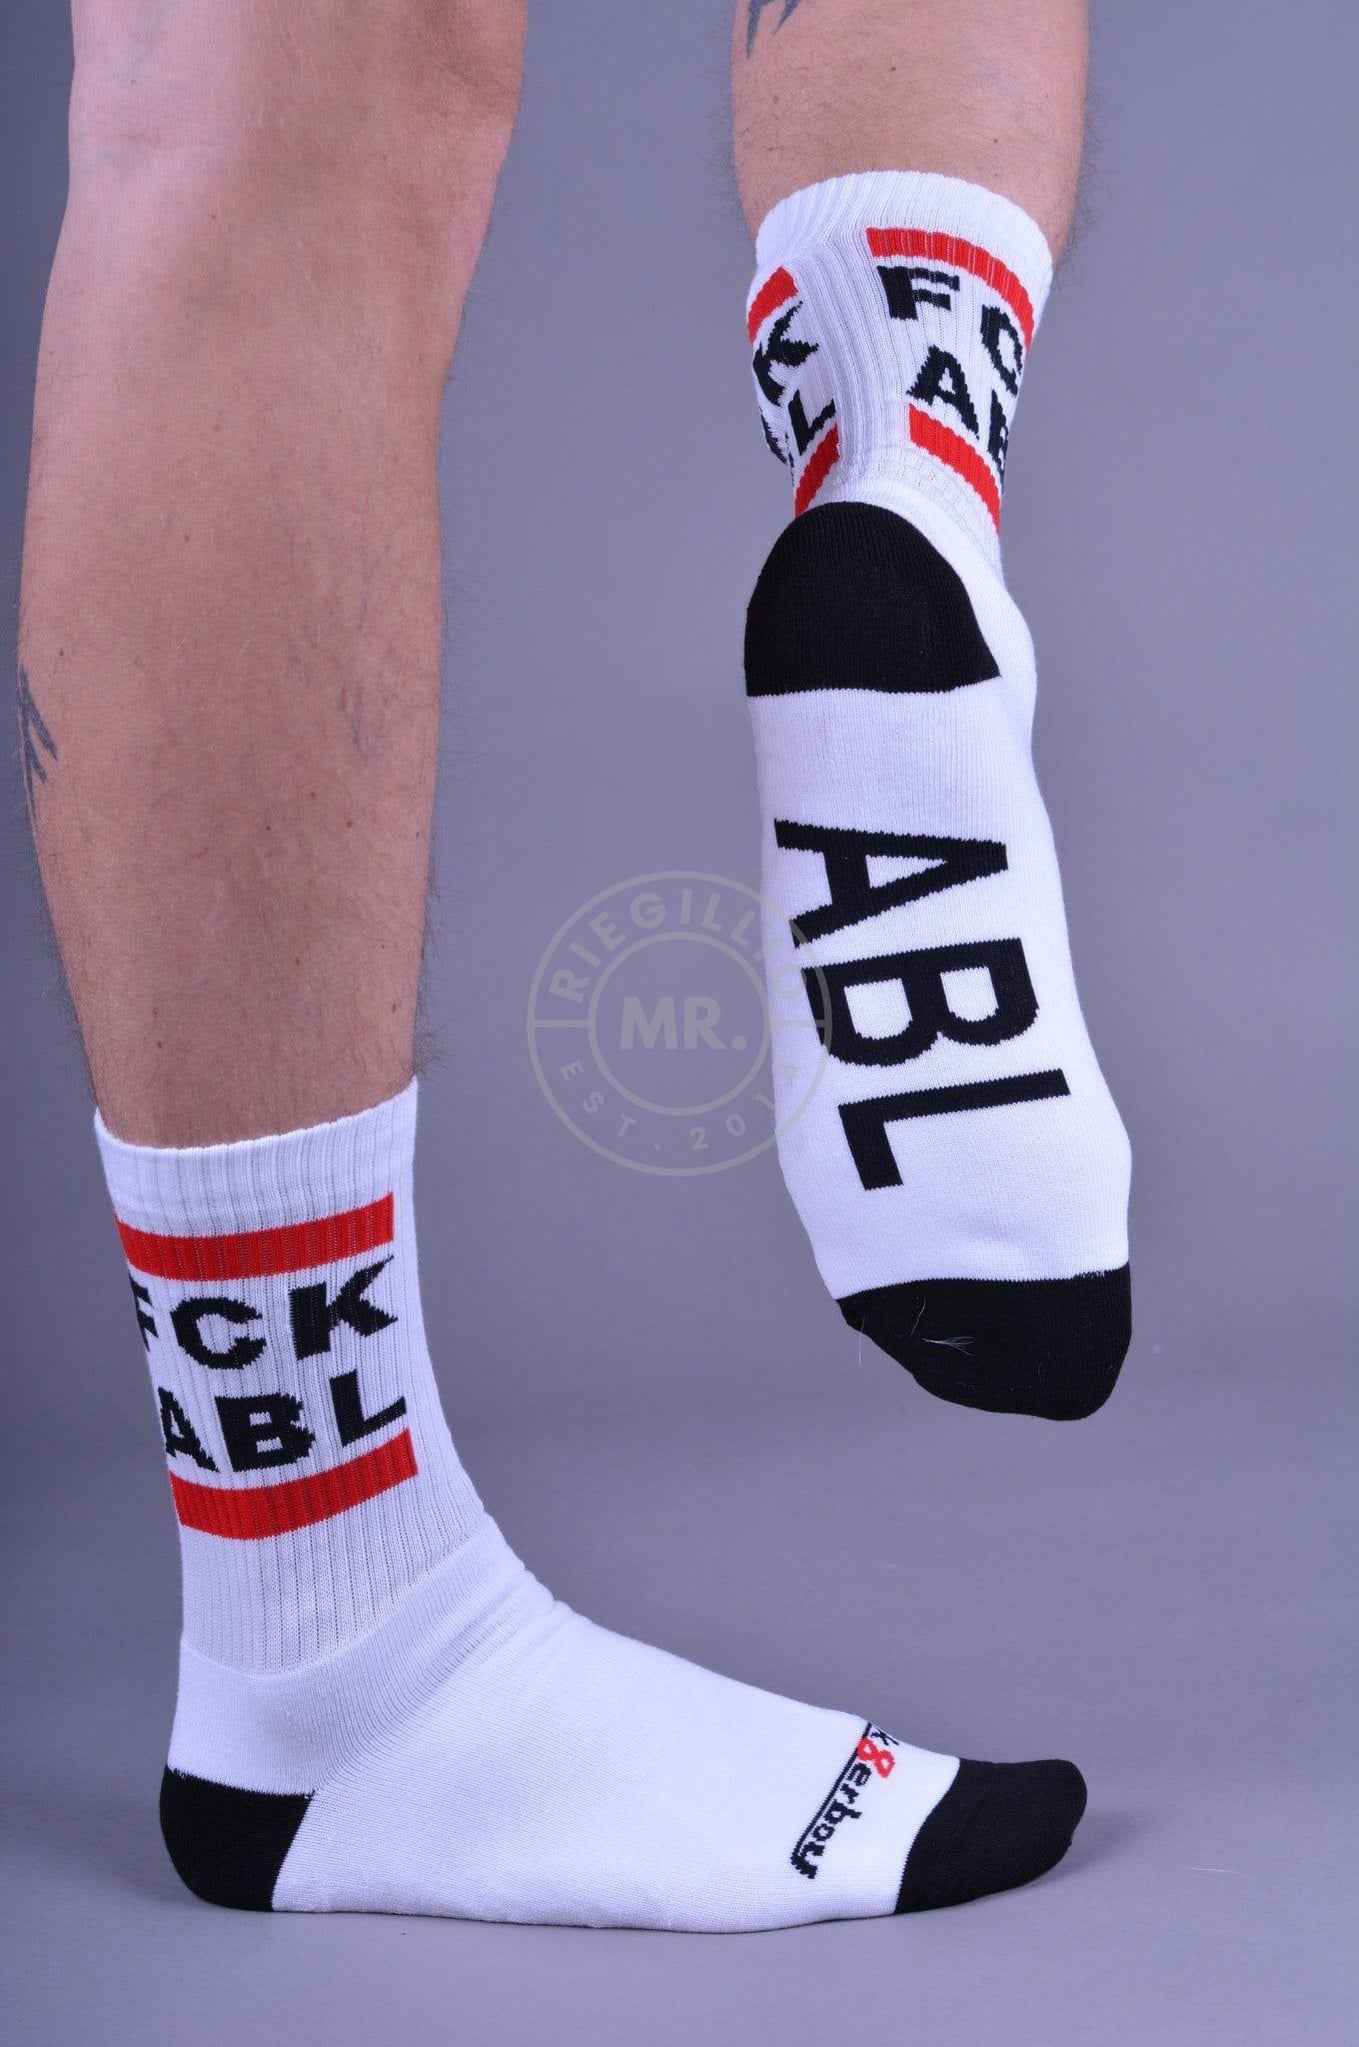 Sk8erboy FCK ABL Socks-at MR. Riegillio